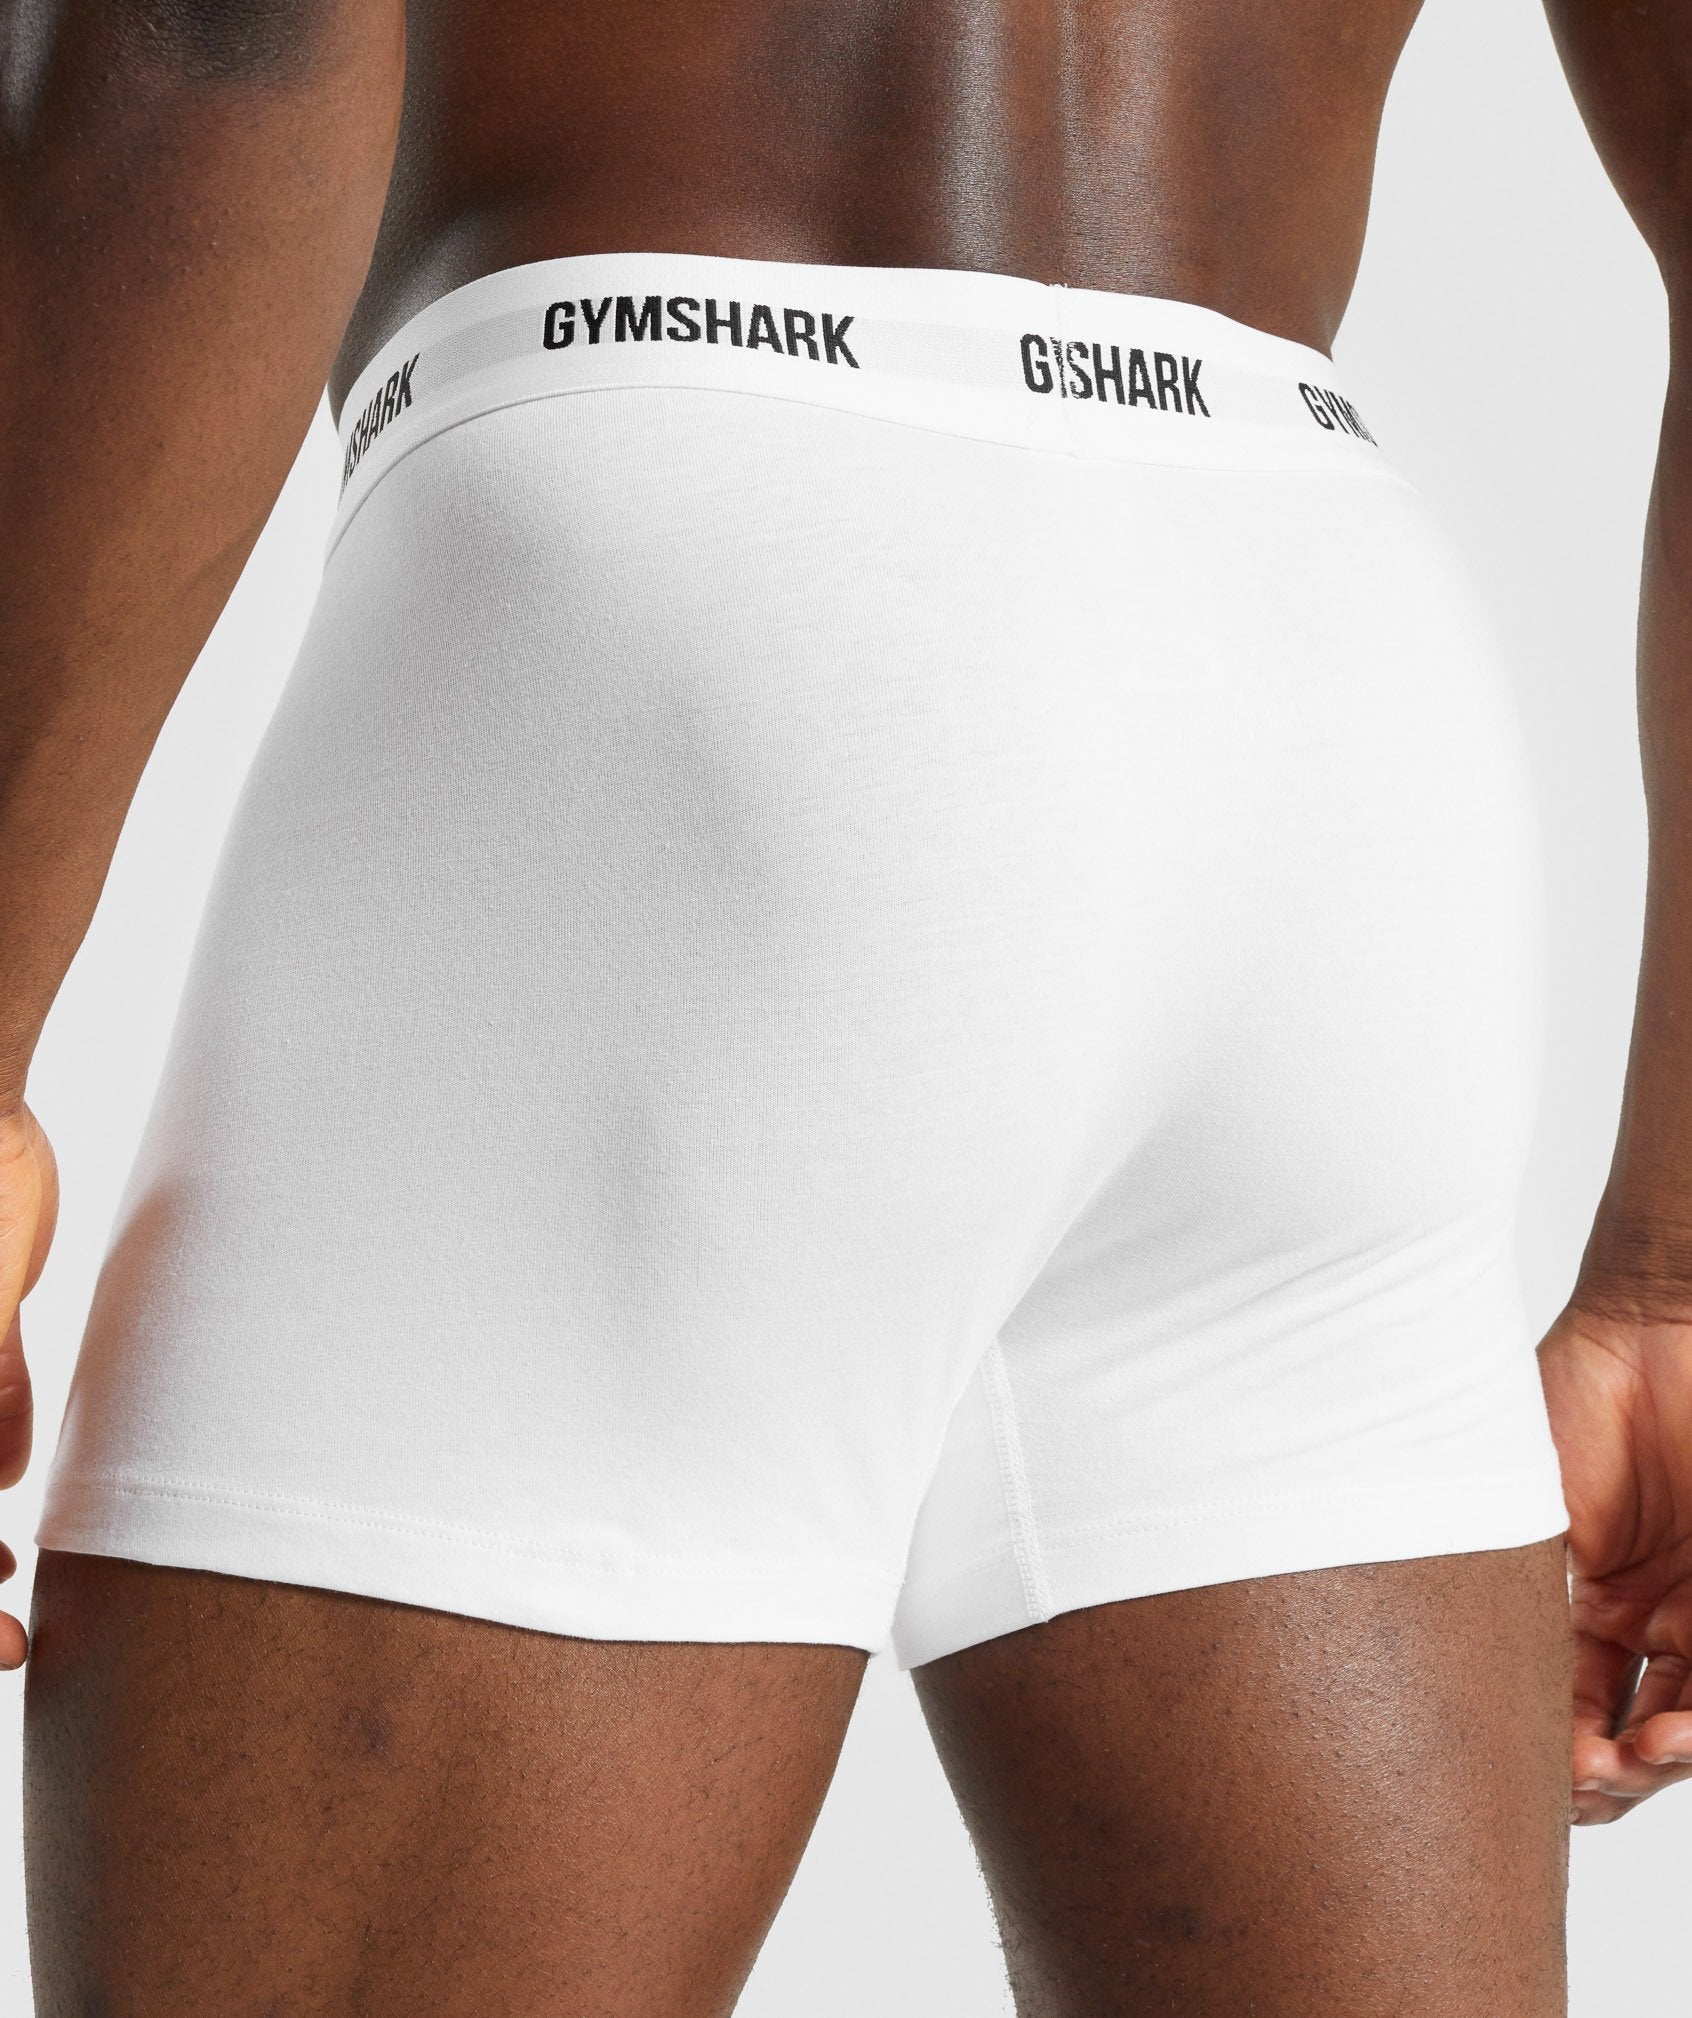 Buy Mens Underwear at Online Store in 20% OFF